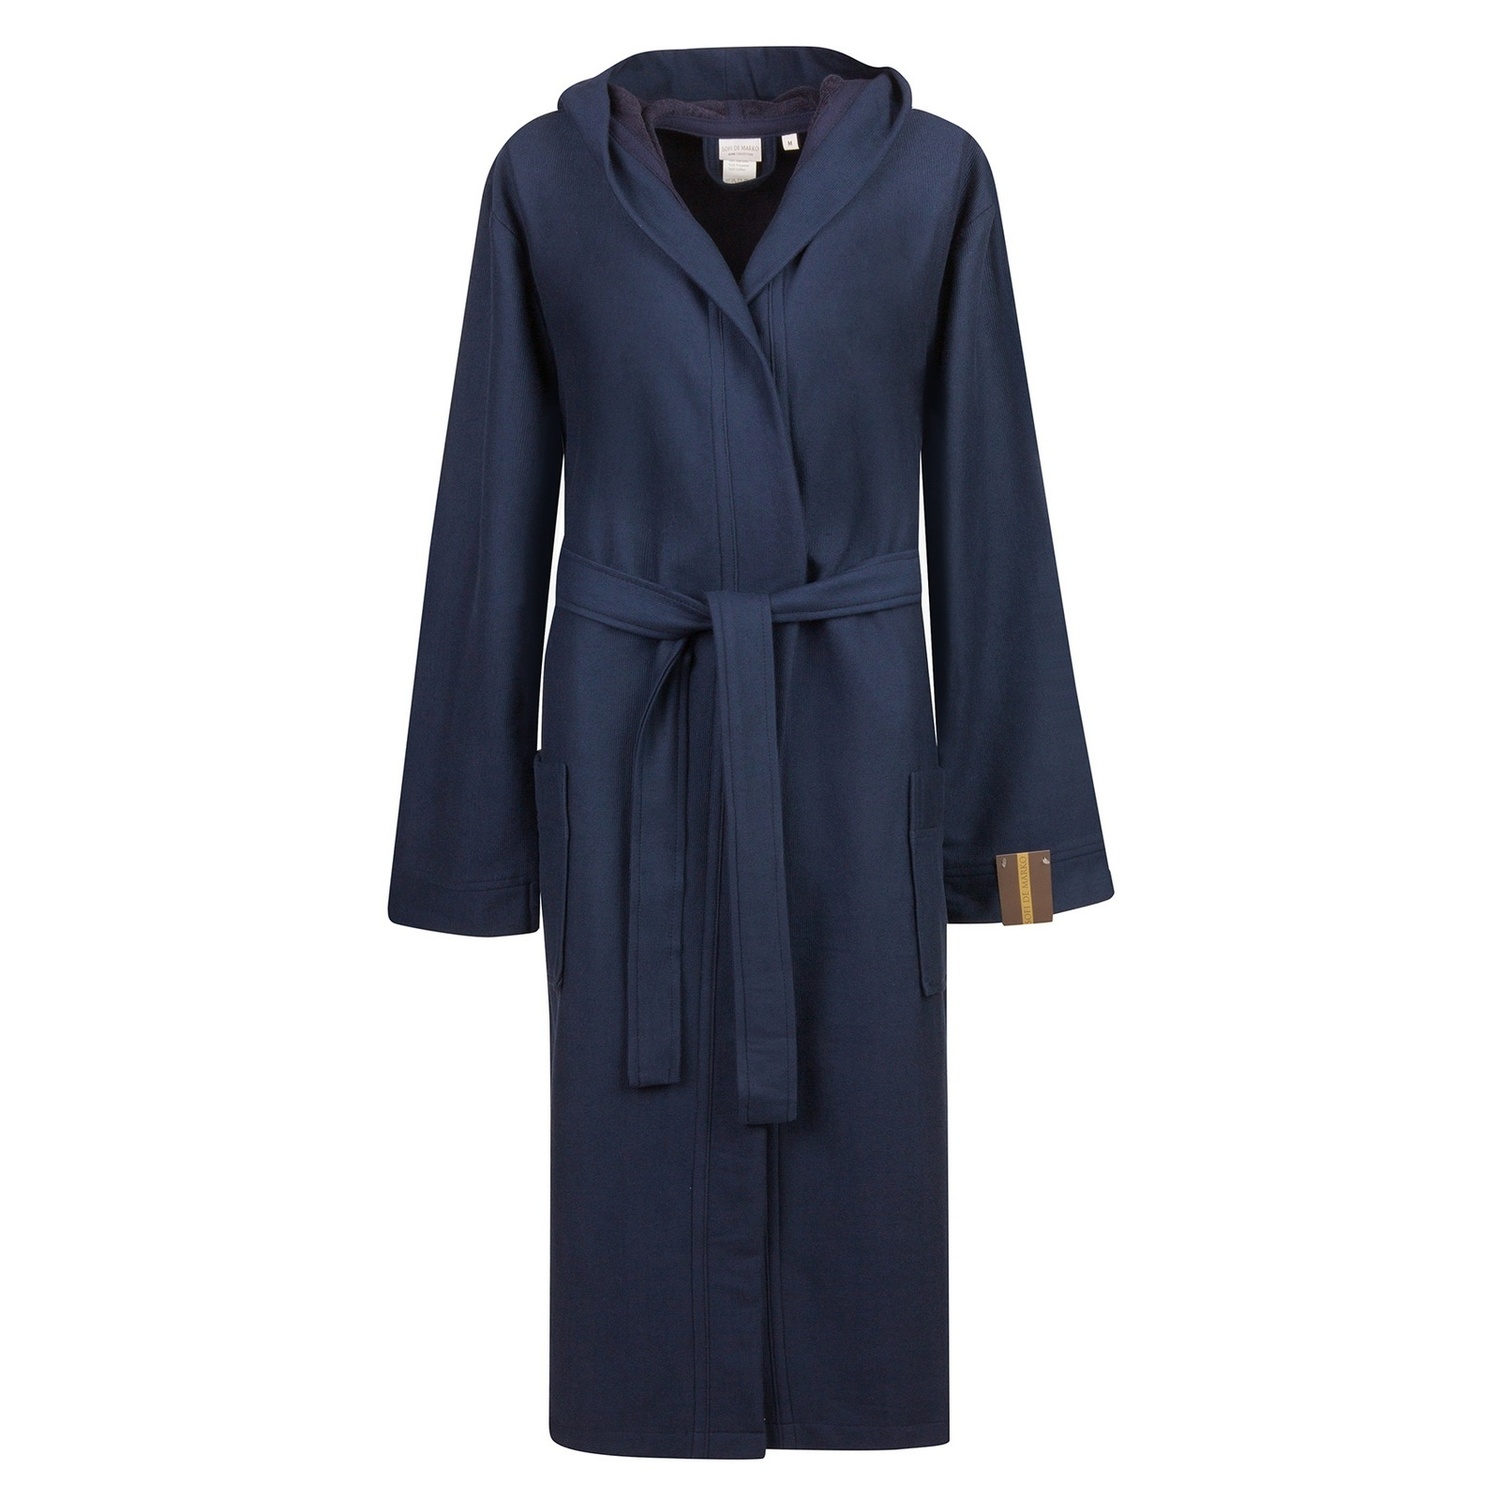 Банный халат Марвин цвет: синий (XL)